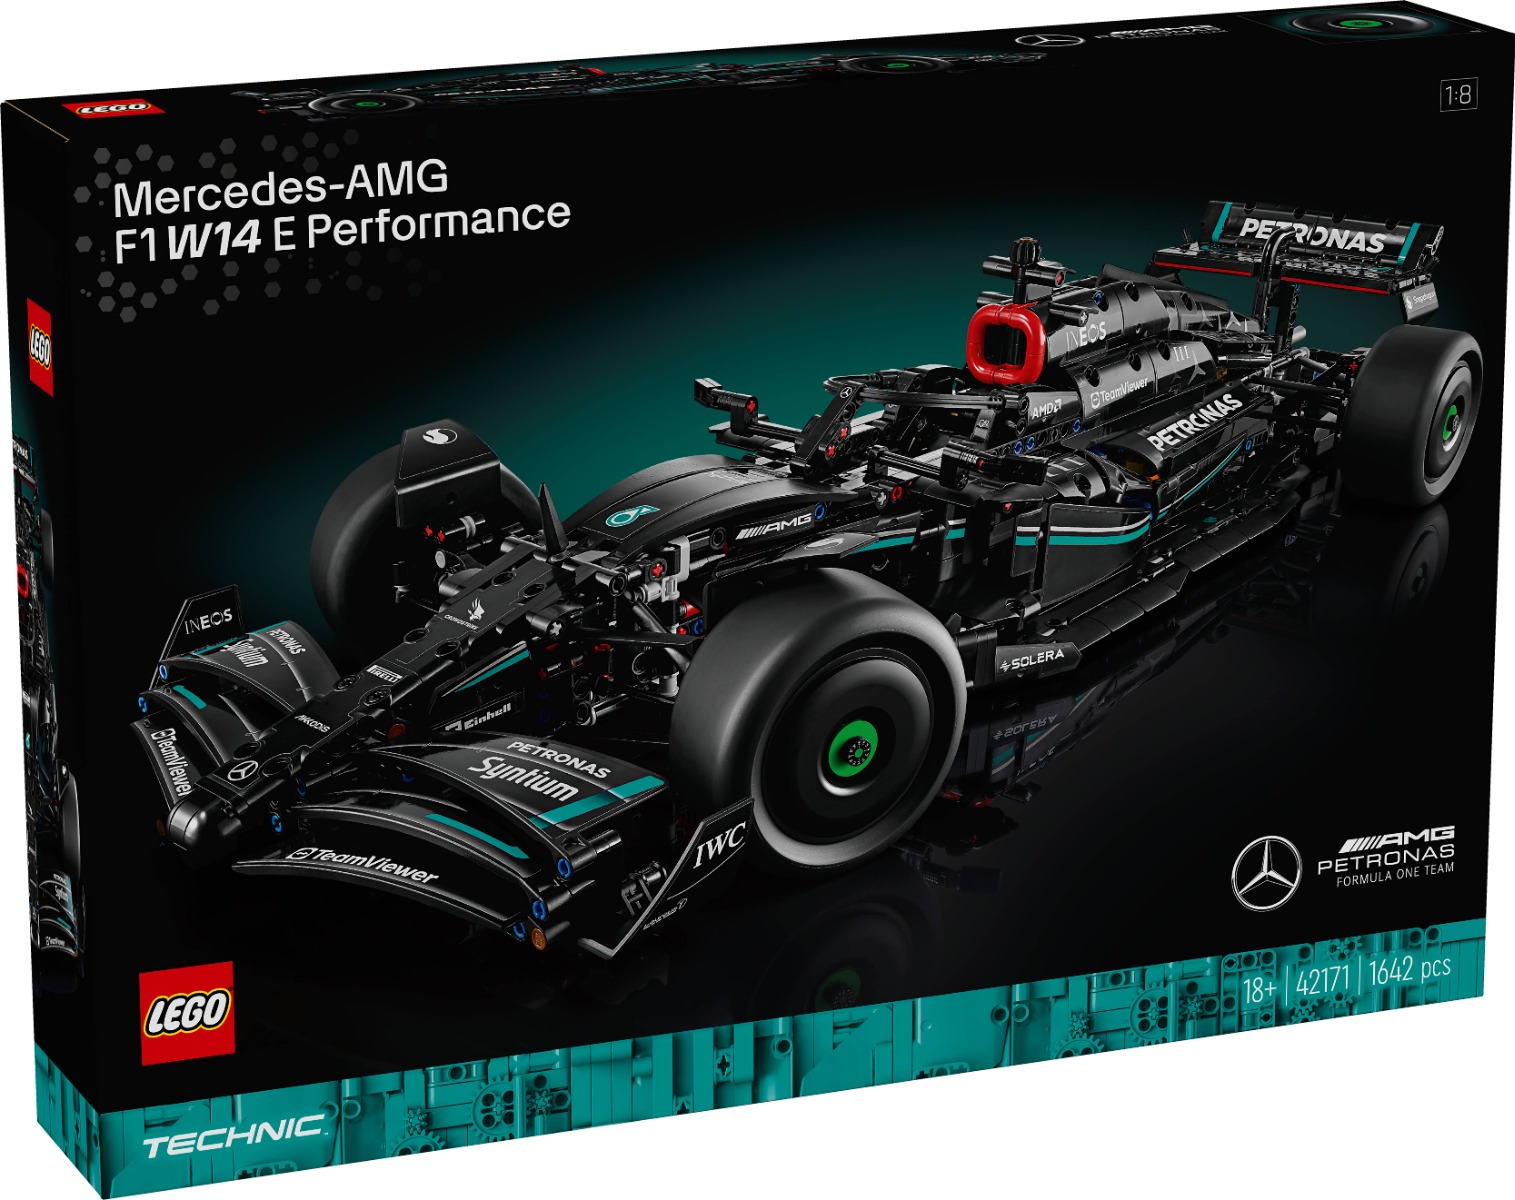 LEGOÂ® Technic - Mercedes-AMG F1 W14 E Performance (42171)